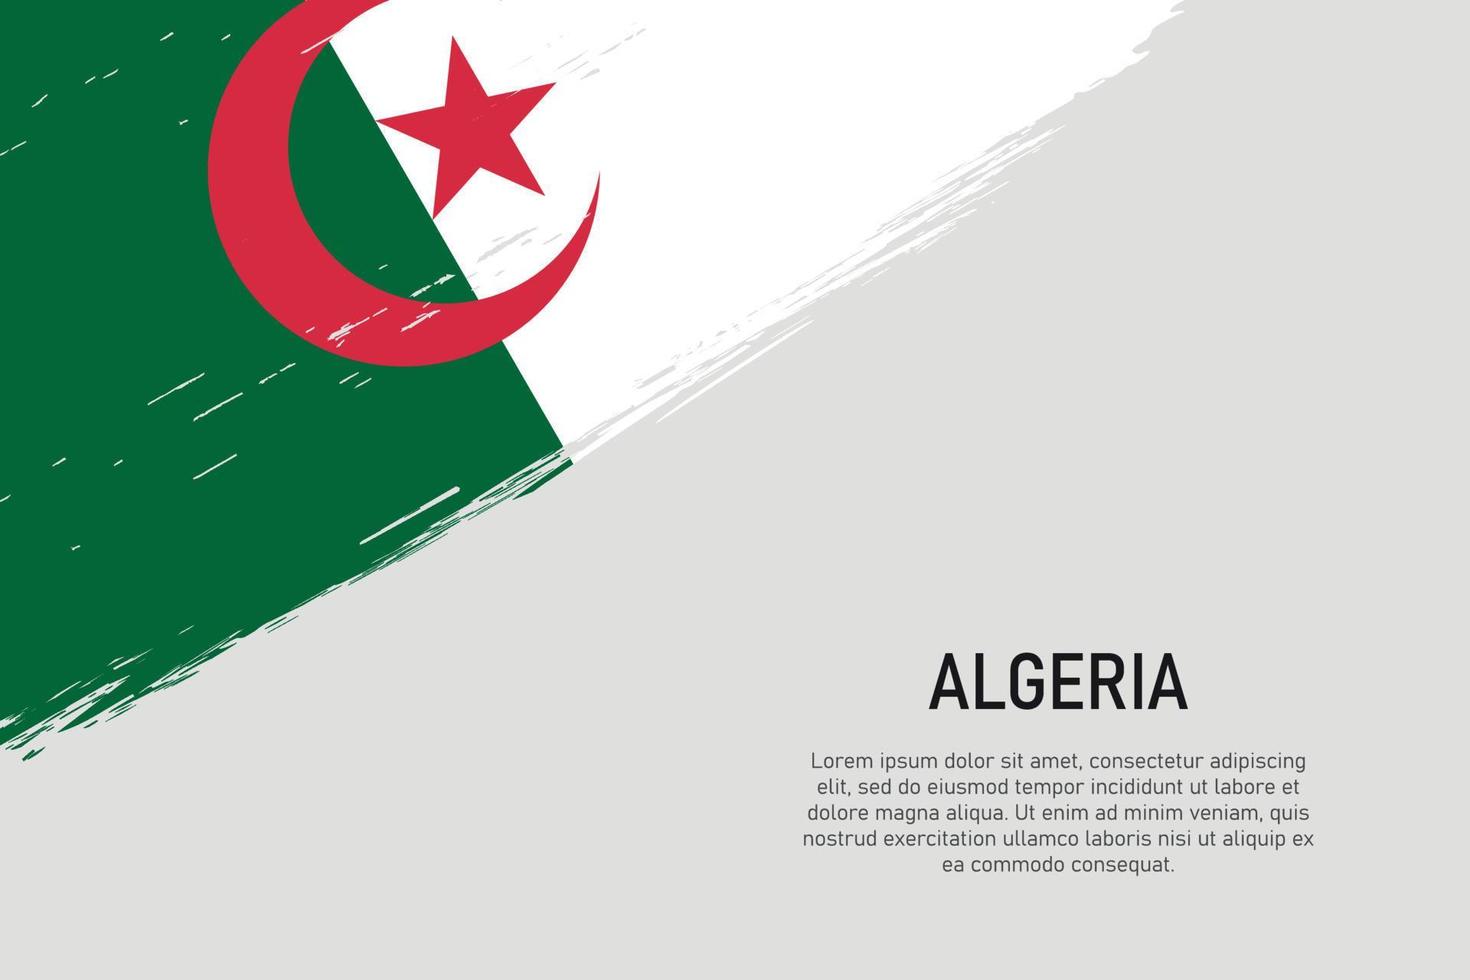 Grunge styled brush stroke background with flag of Algeria vector